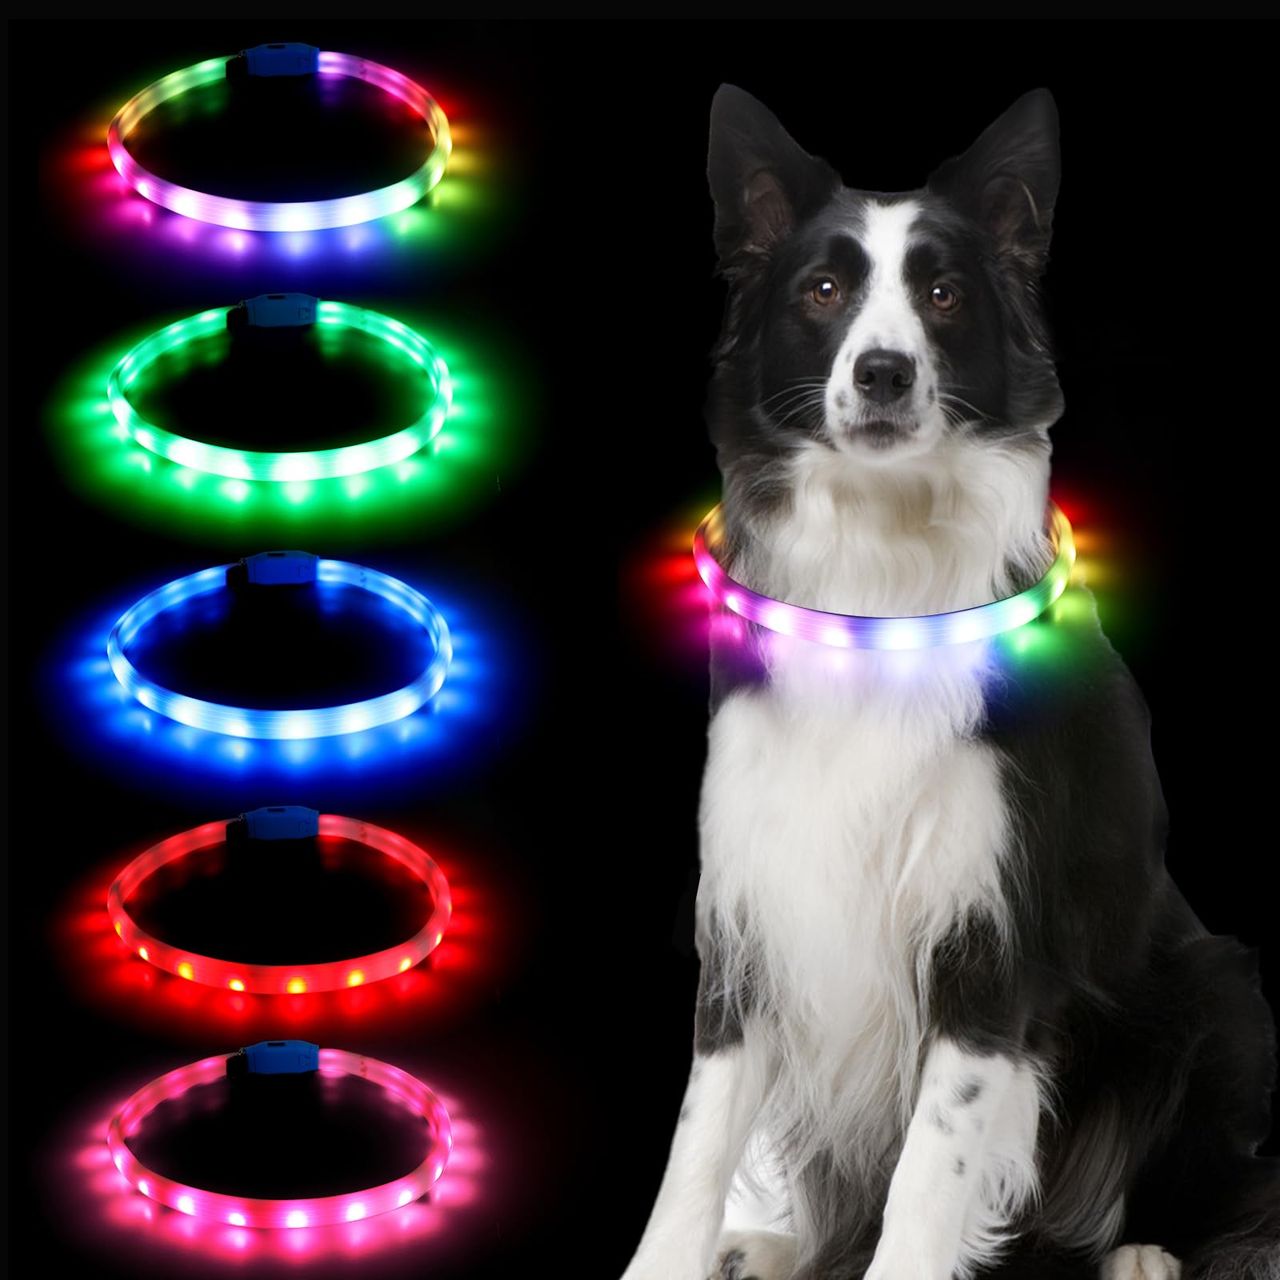 Sazuik 犬 光る首輪 12つ発光モード 多色発光 ペット LED首輪 USB充電式 サイズ調整可能 装着簡単 柔らかい 犬 猫 夜散歩ライト 軽量 安全対策 視認性 小型 中型 大型犬 (ホワイト)